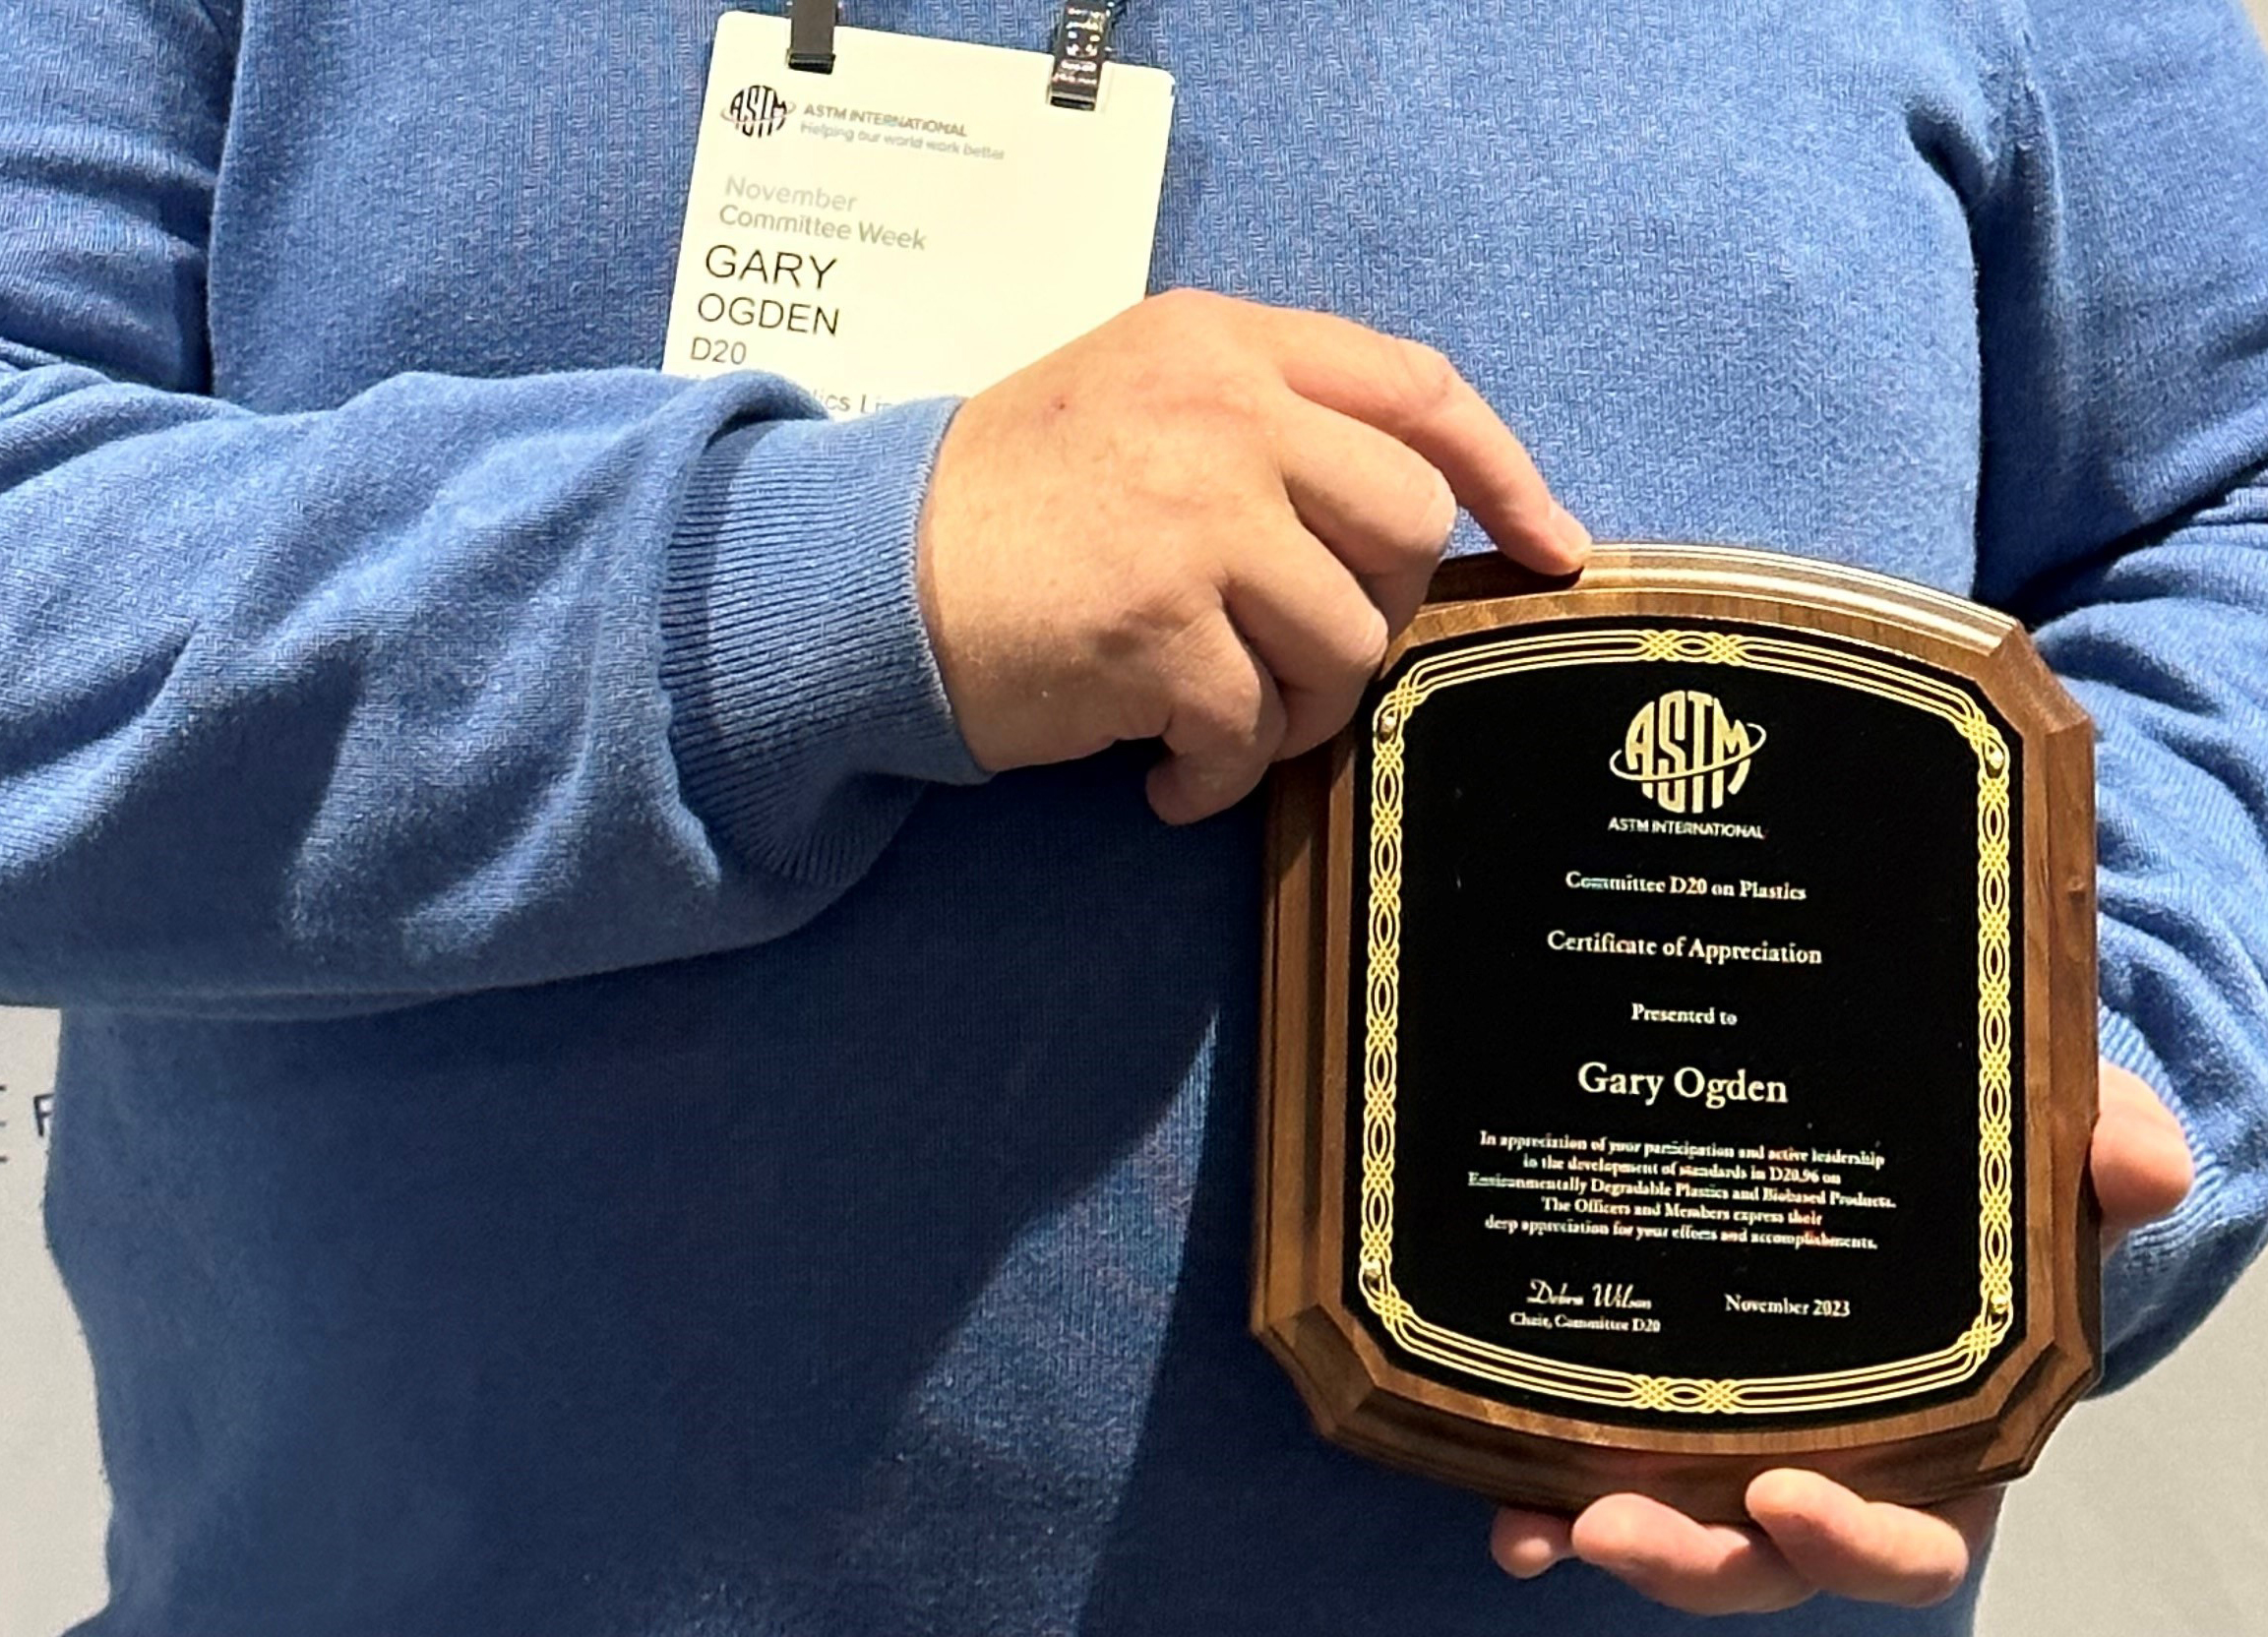 Dr Gary Ogden receives Award from ASTM